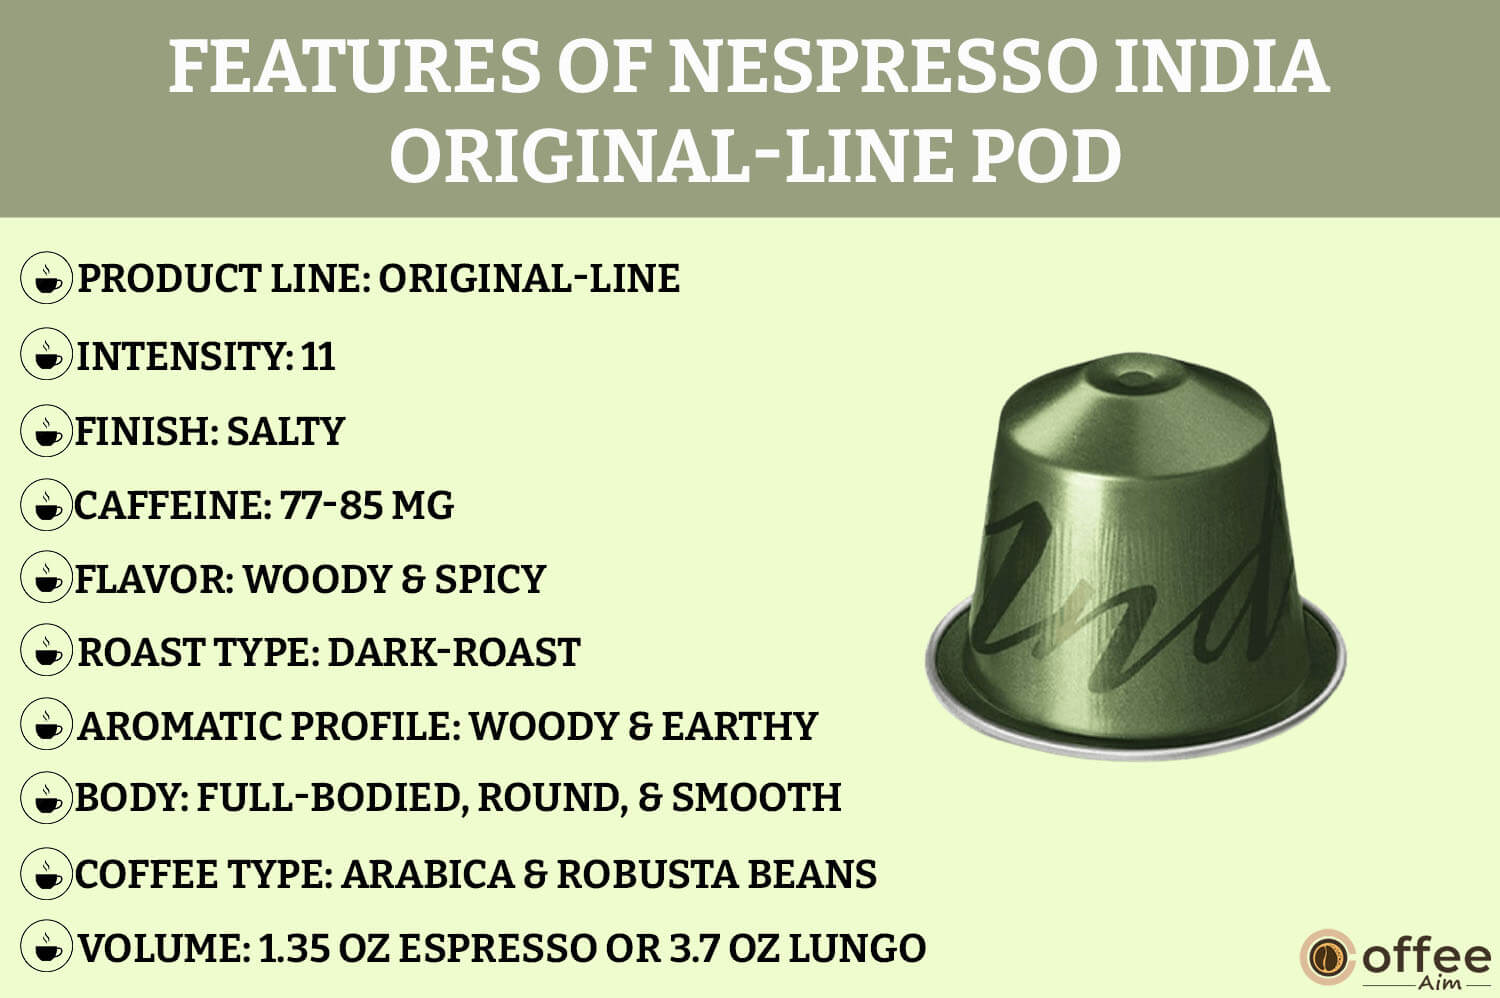 
The image showcases the features of the India OriginalLine Pod for the "Nespresso India OriginalLine Pod Review" article.